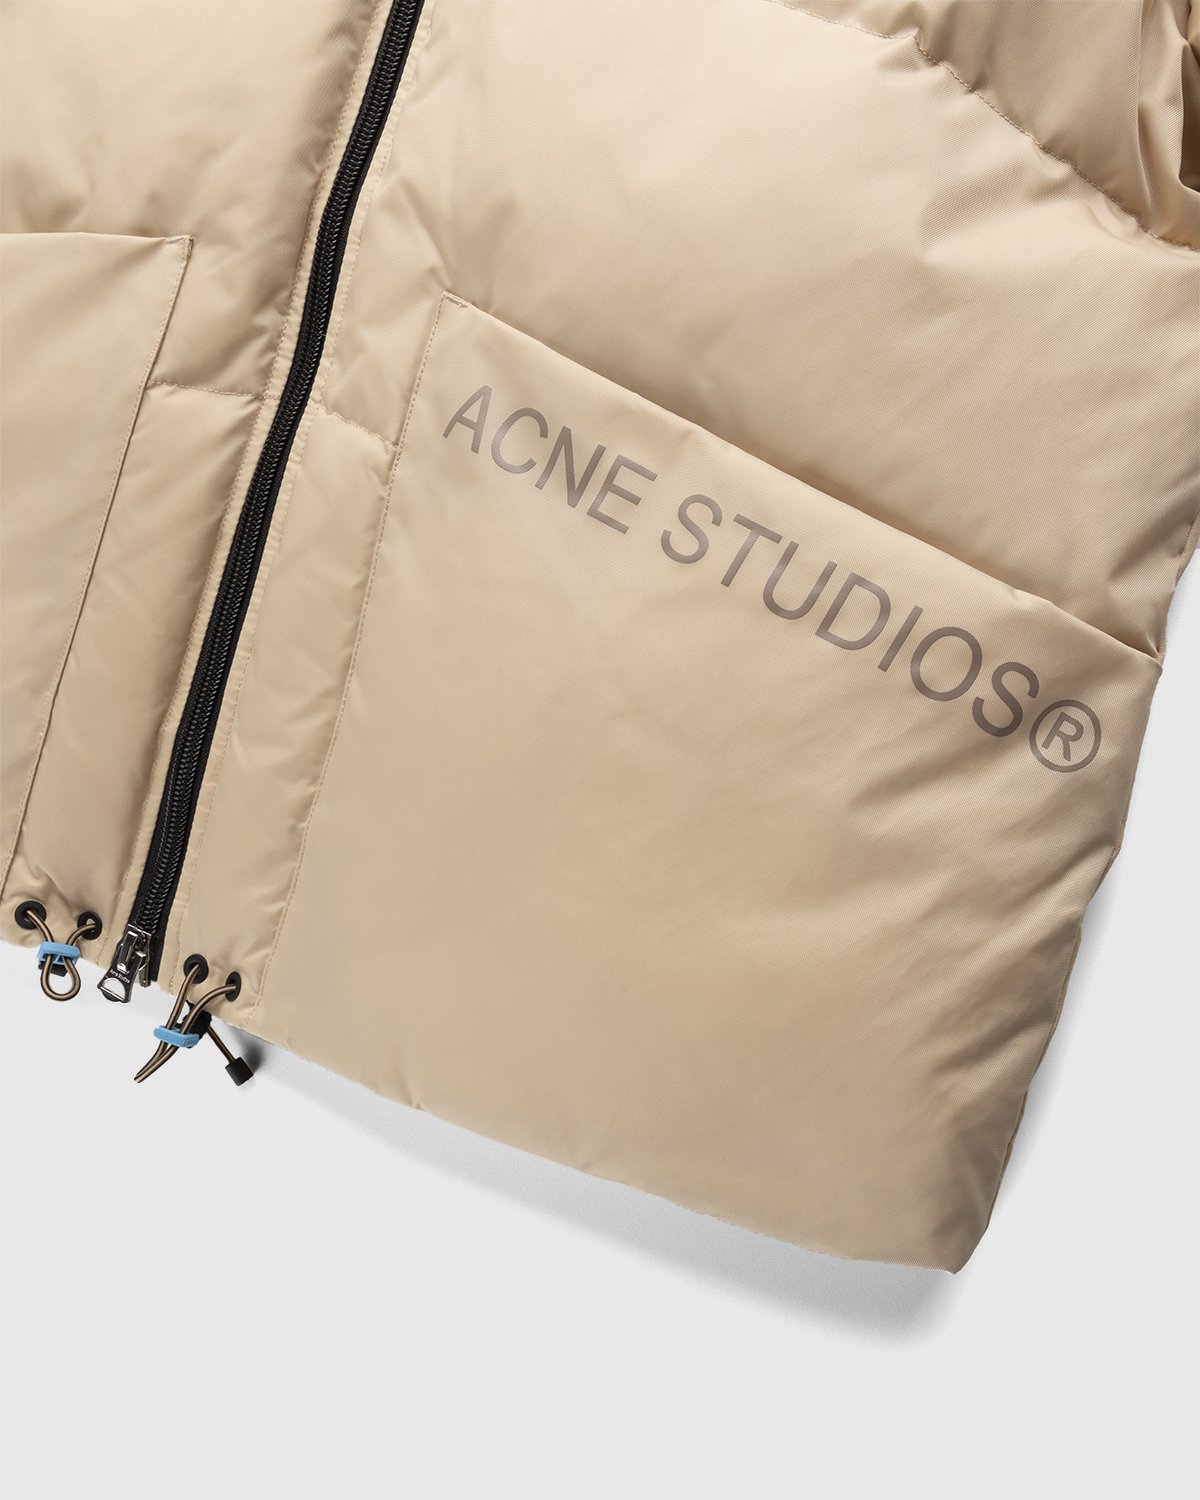 Acne Studios - Puffer Jacket Biscuit Beige - Clothing - Beige - Image 4